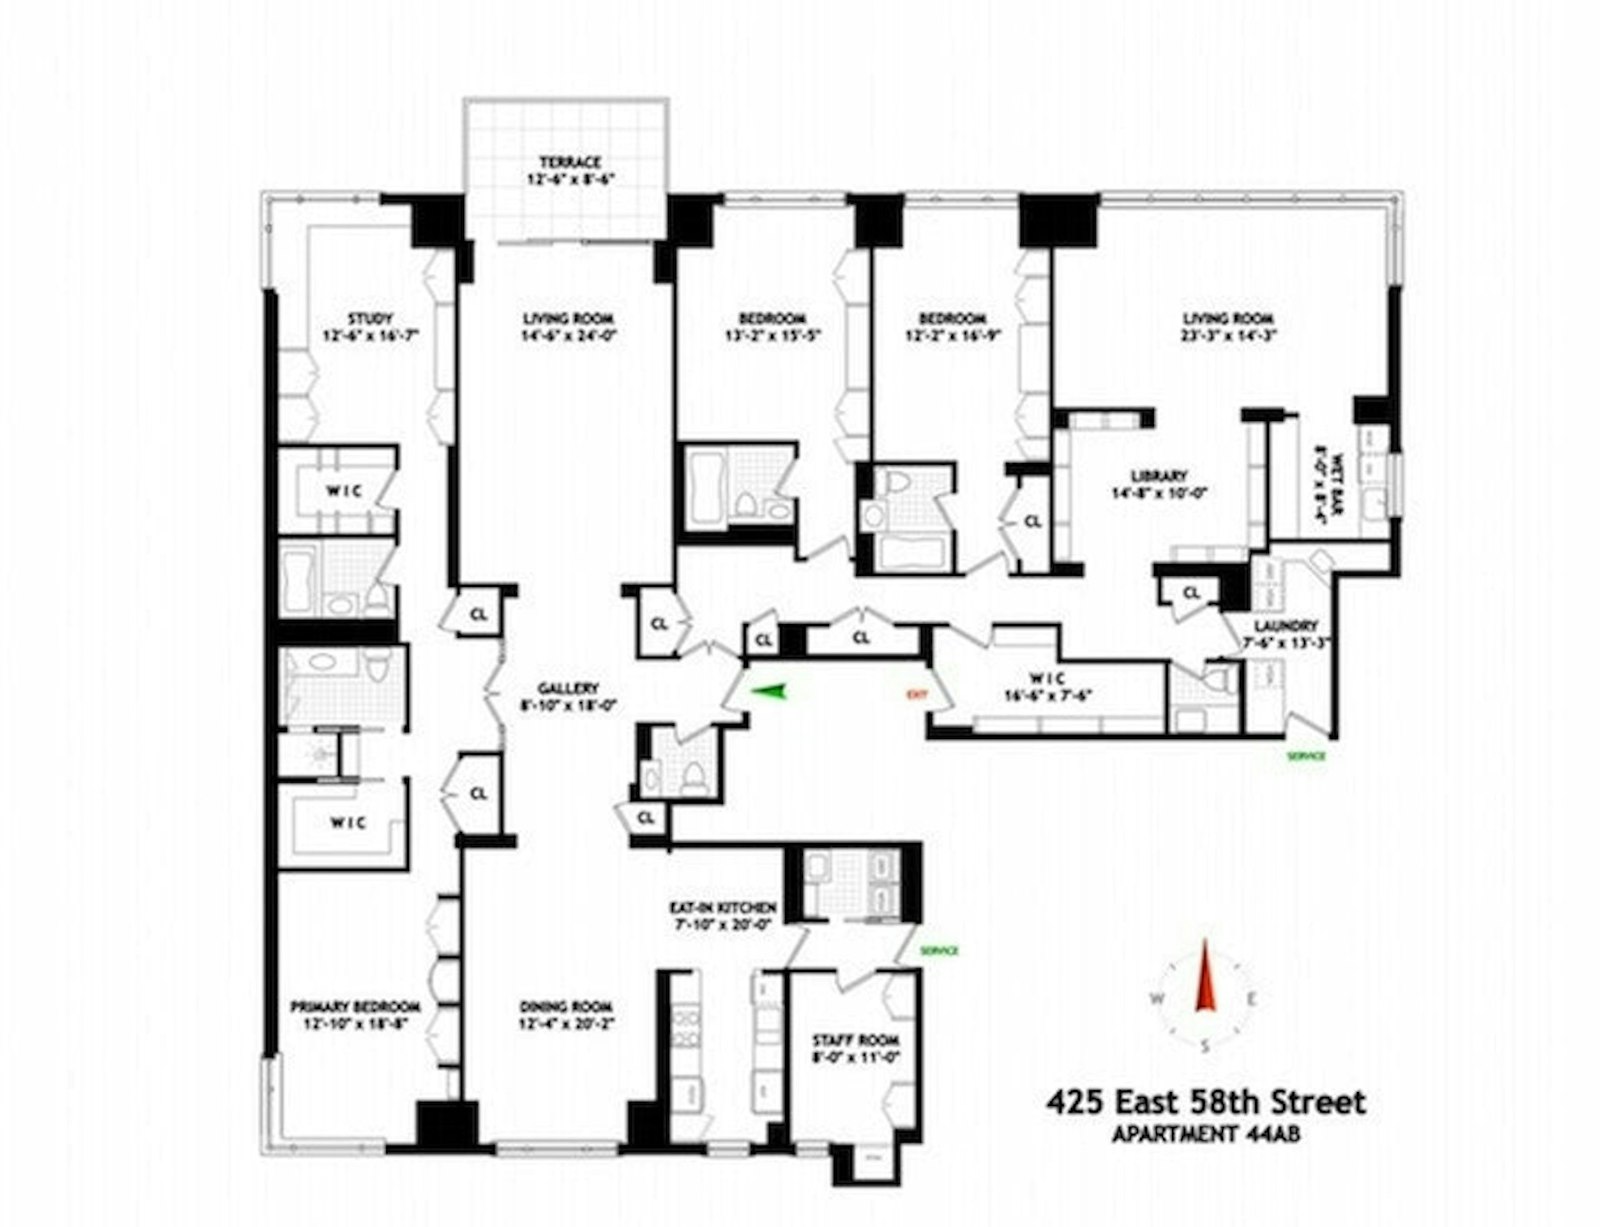 Floorplan for 425 East 58th Street, 44AB